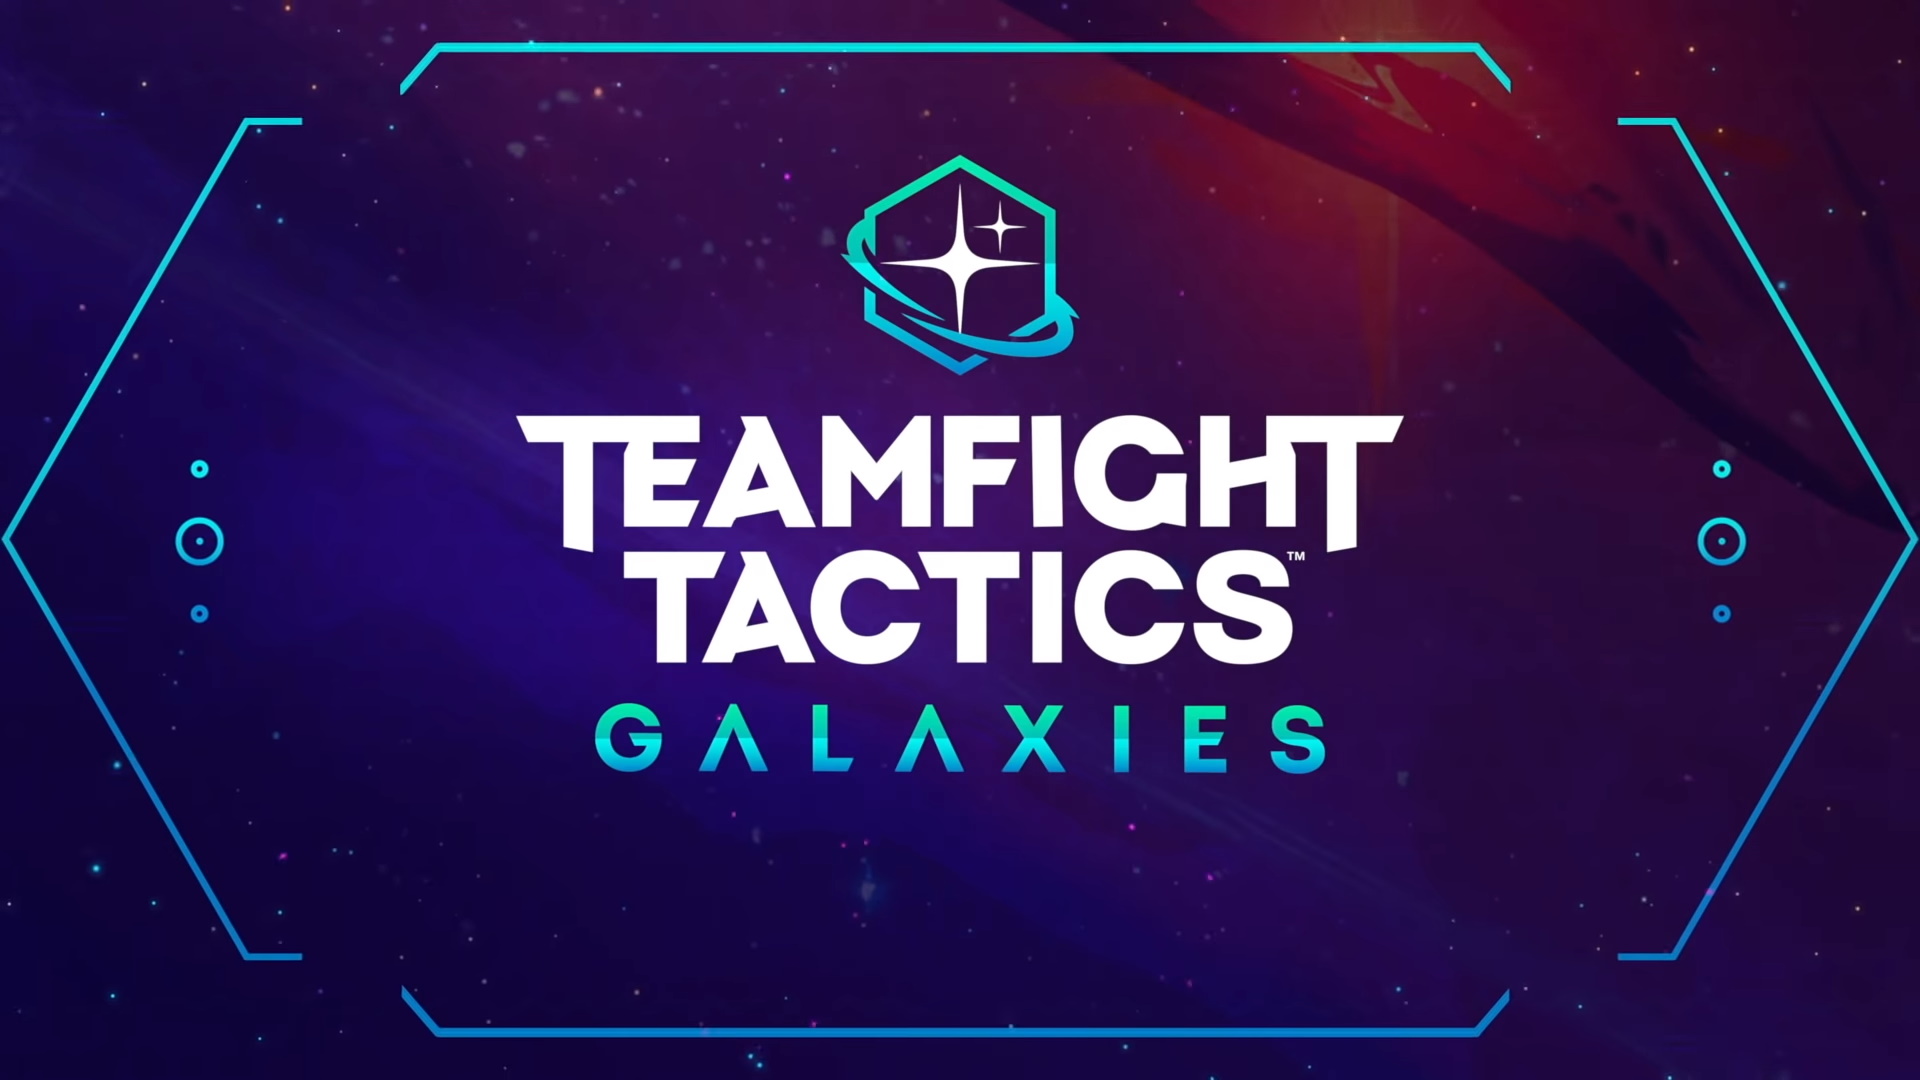 League of Legends Teamfight Tactics: Galaxies follows up Rise of